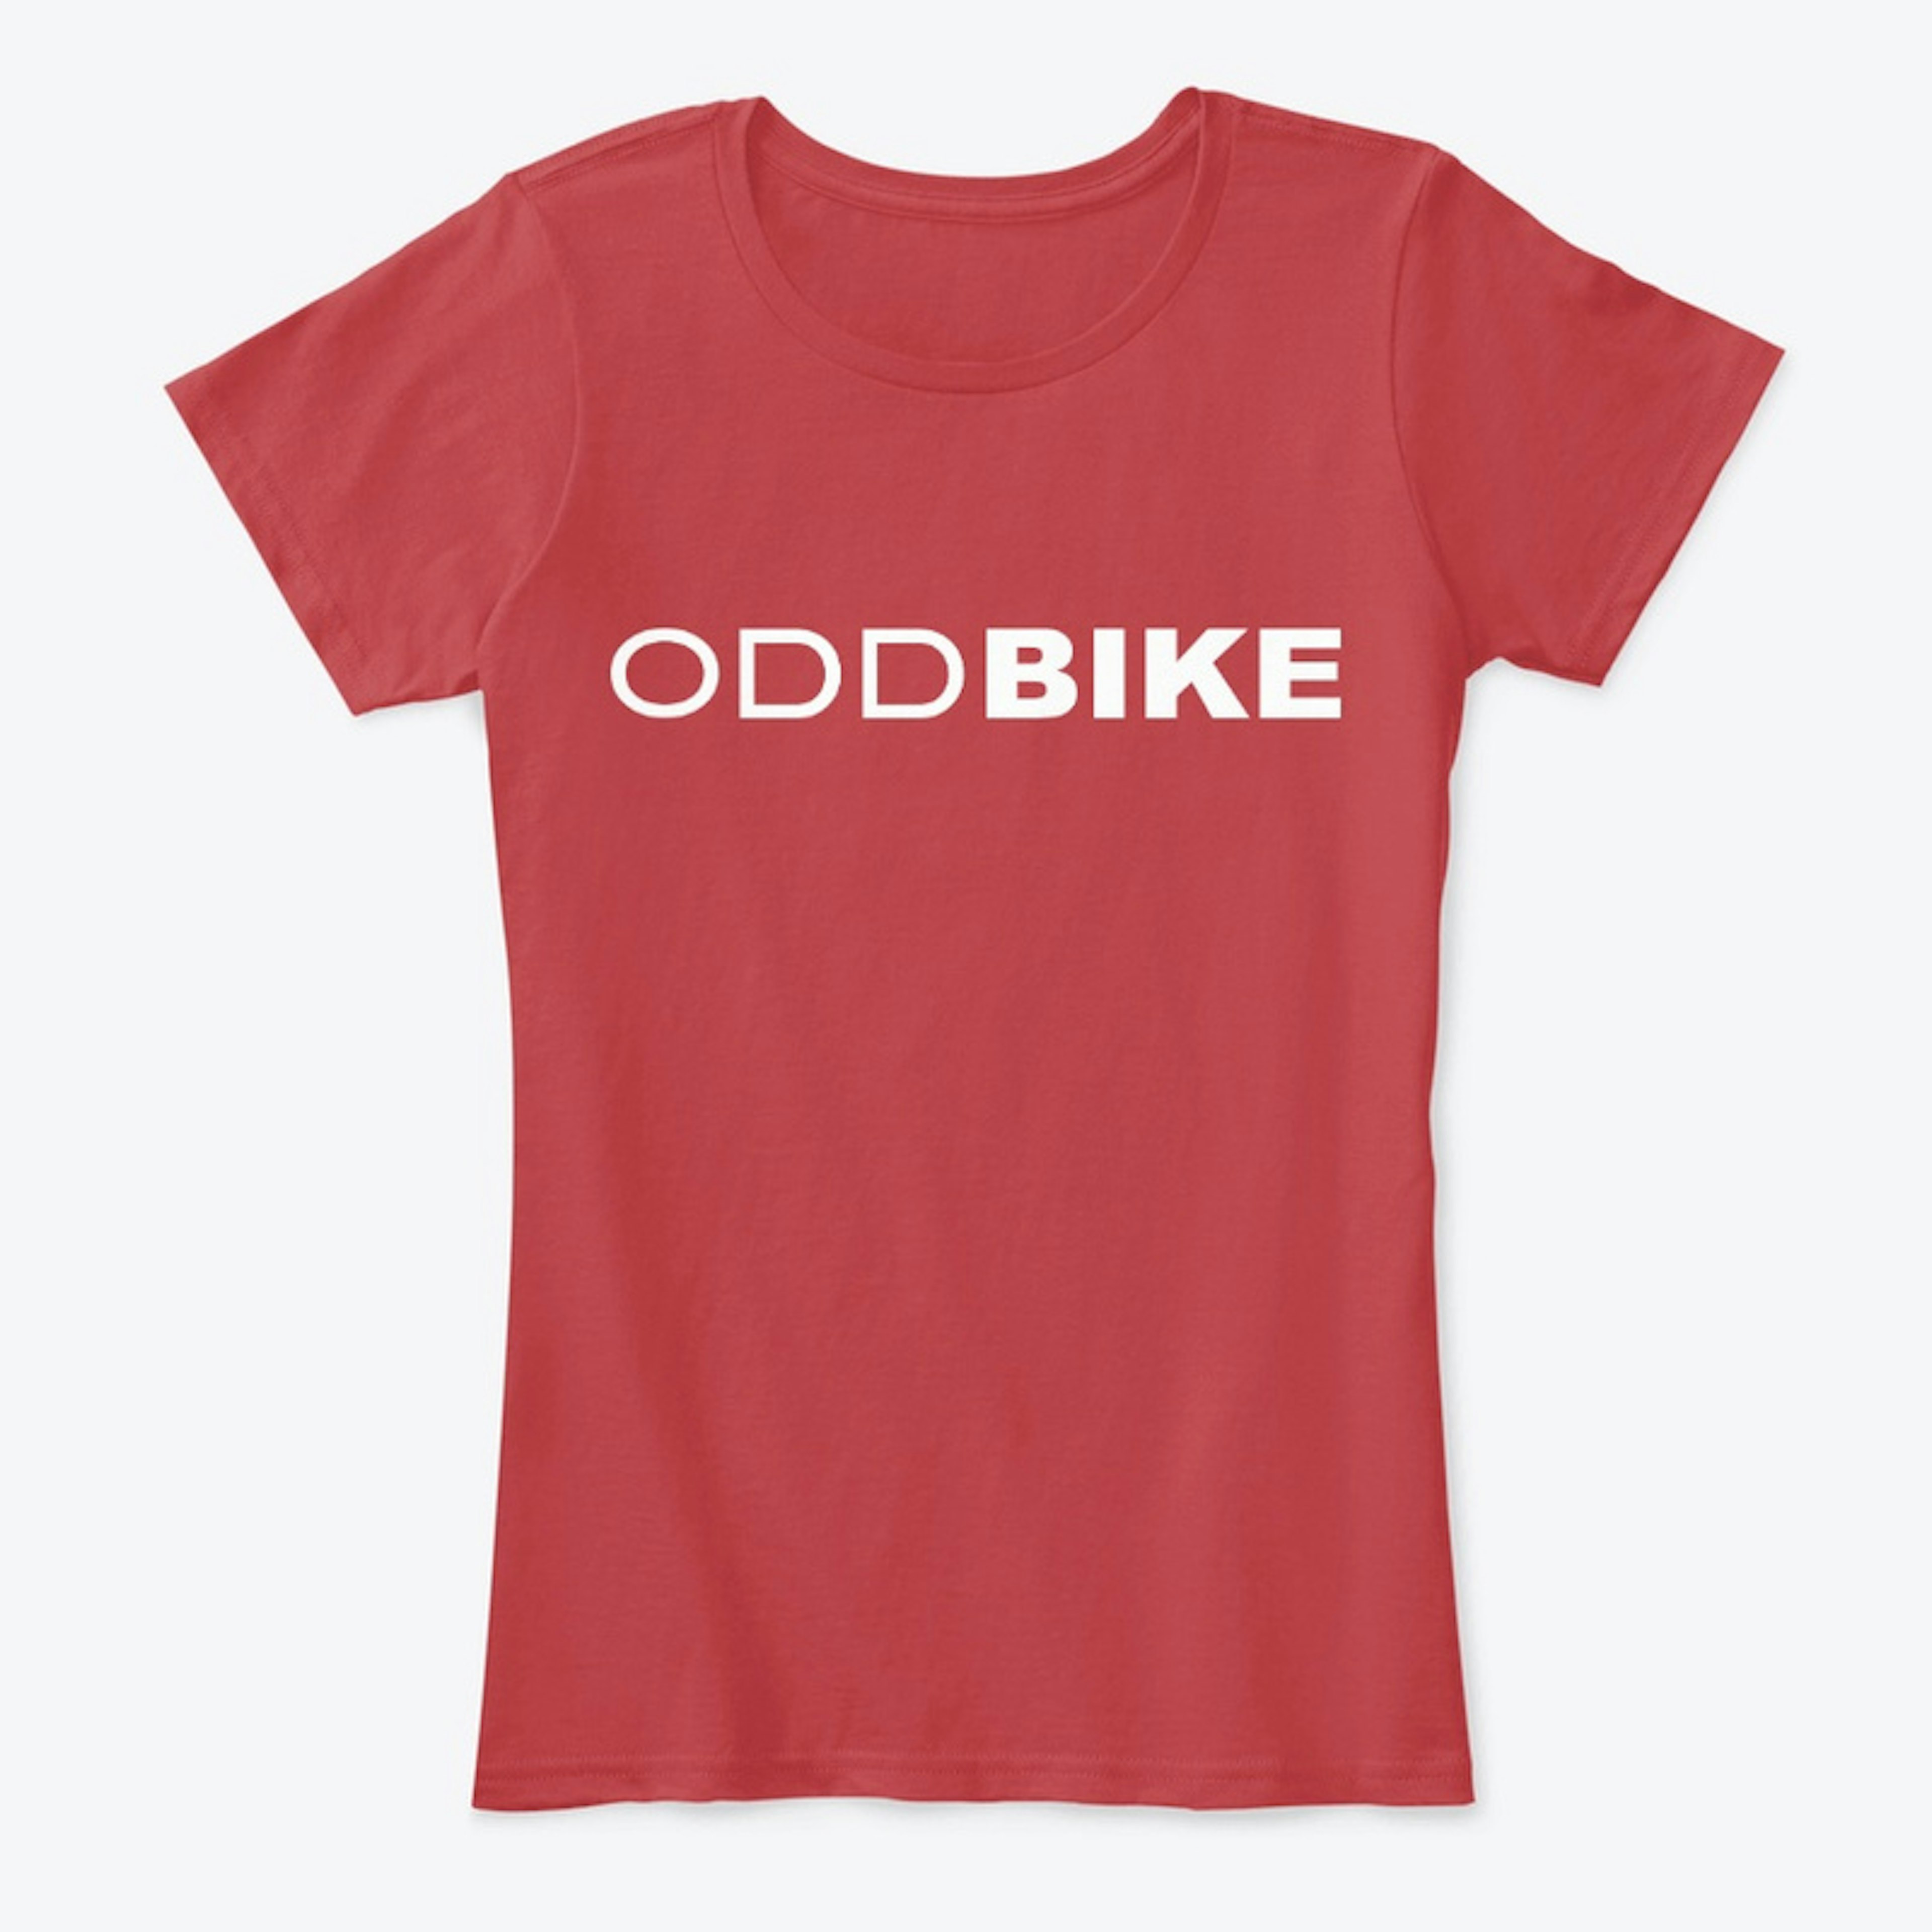 OddBike Women's T-Shirt